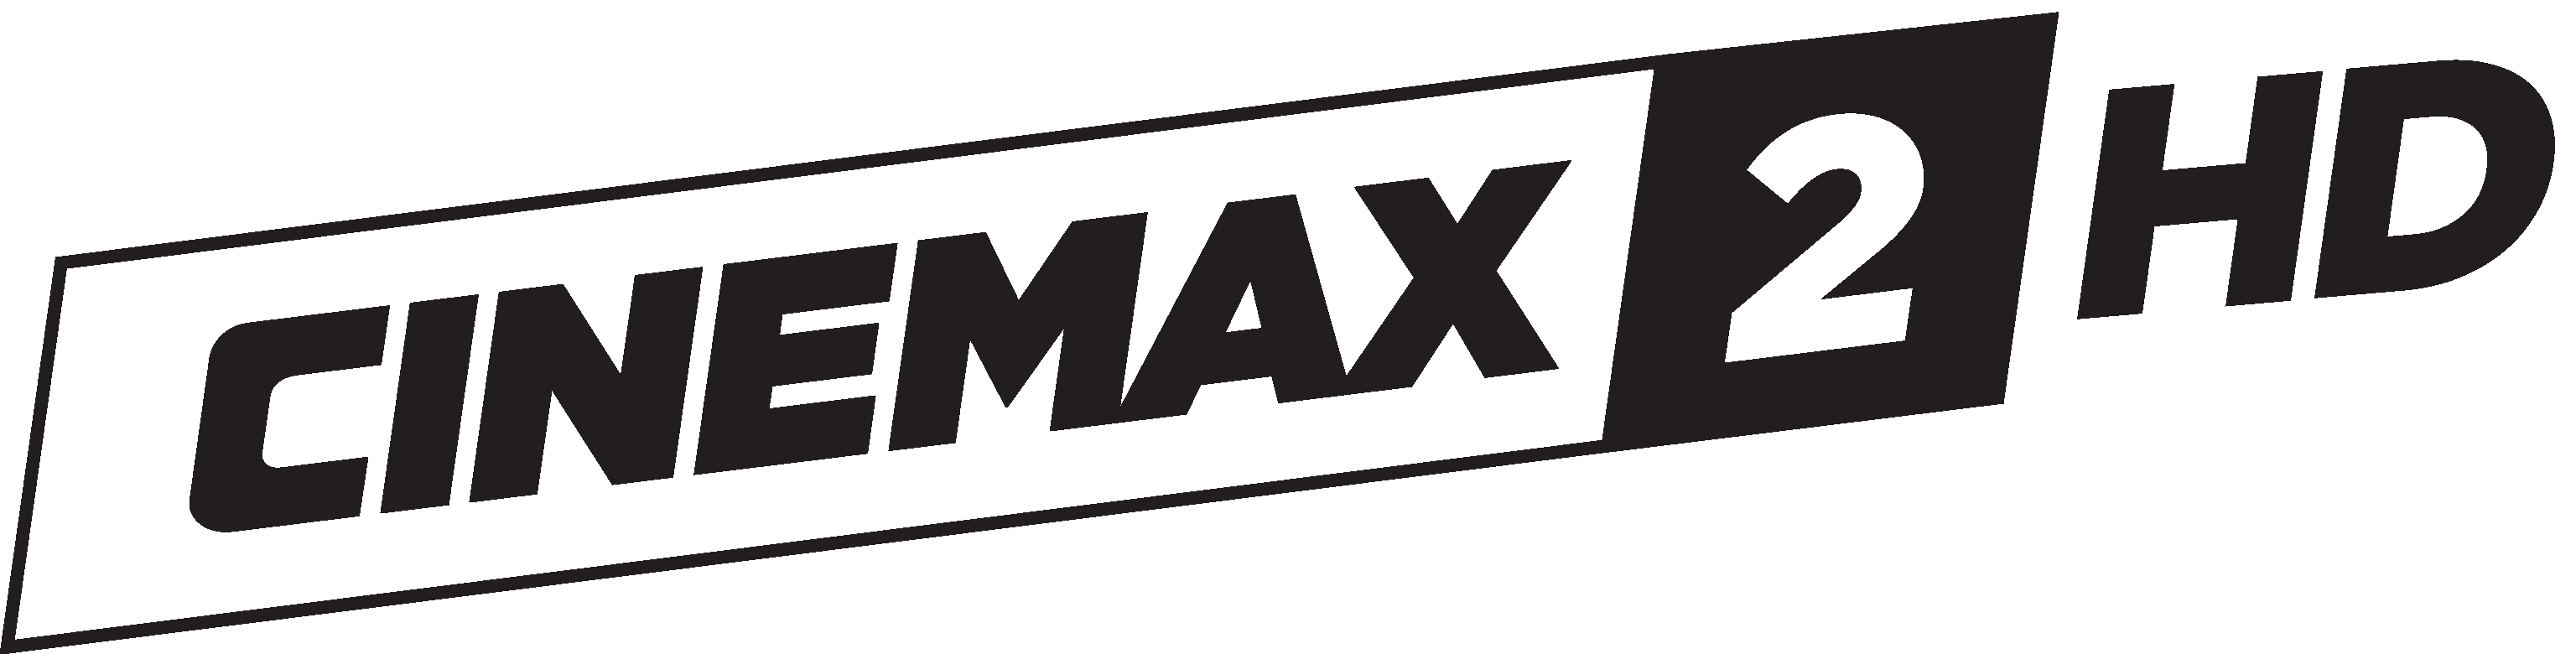 Cinemax 2 HD logo